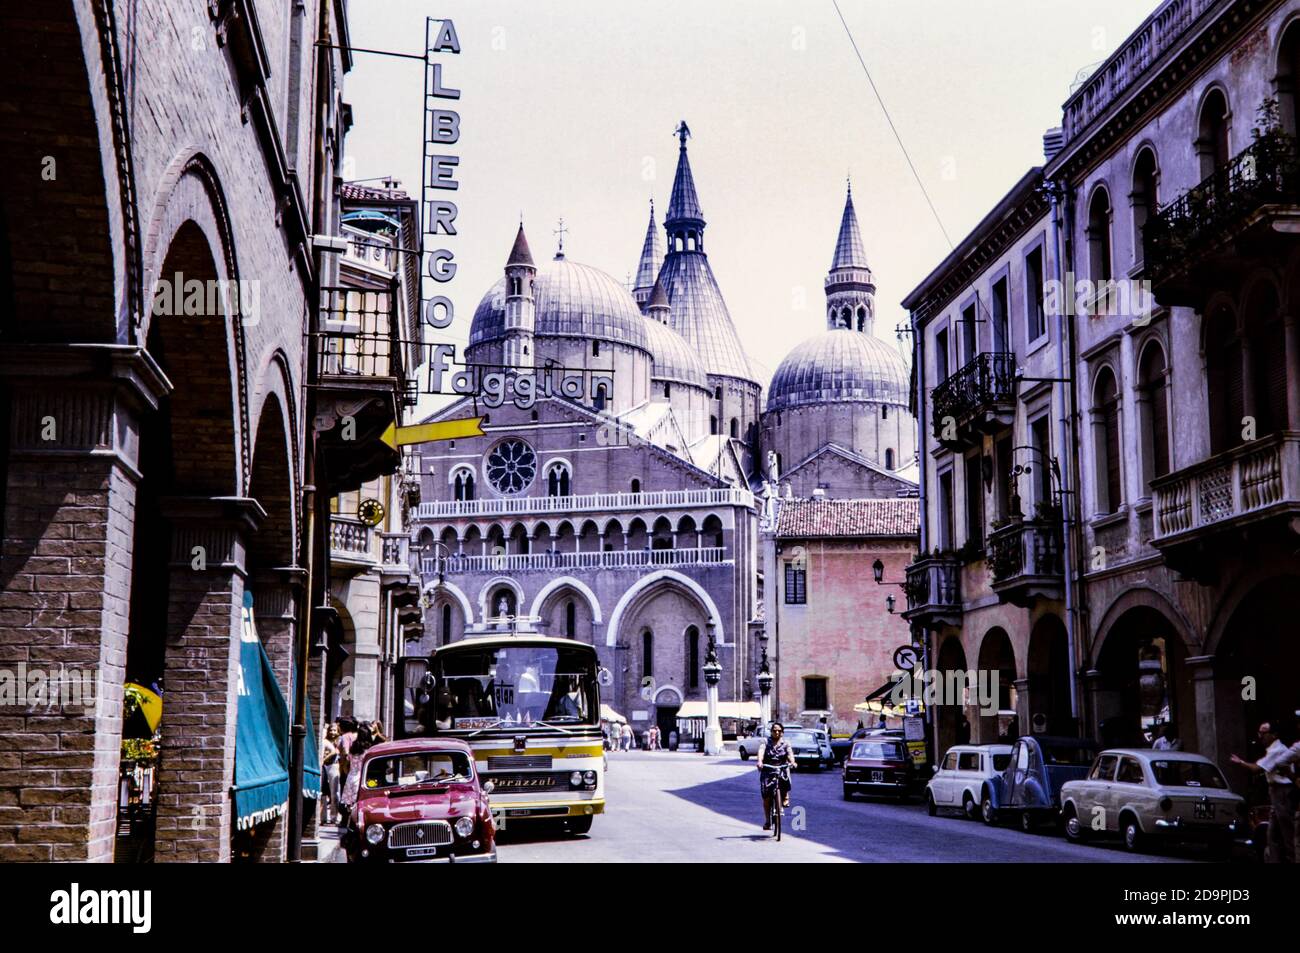 Padova 40 years ago Stock Photo